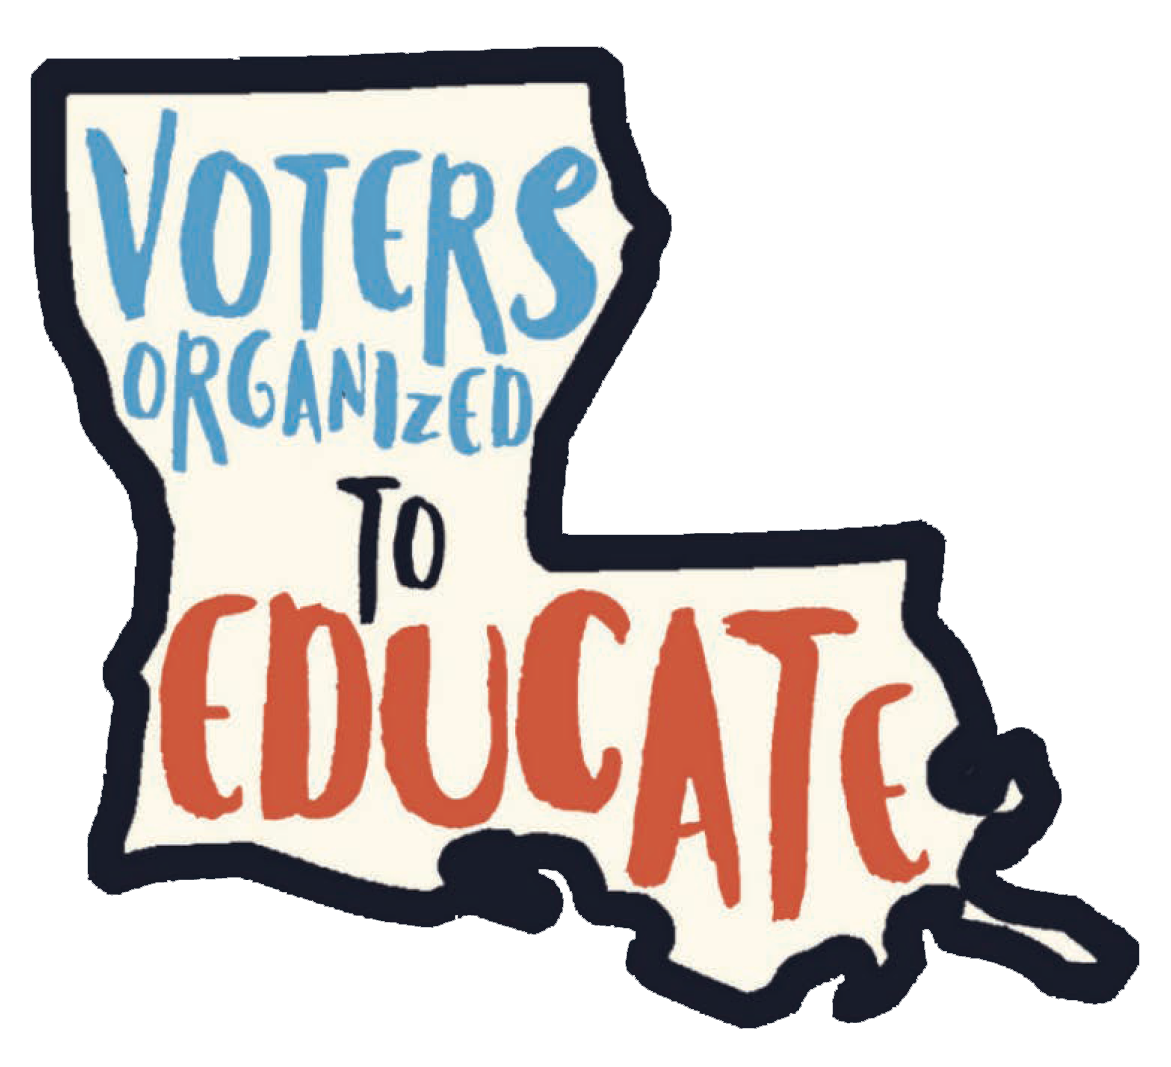 voters organized to educate Louisiana logo